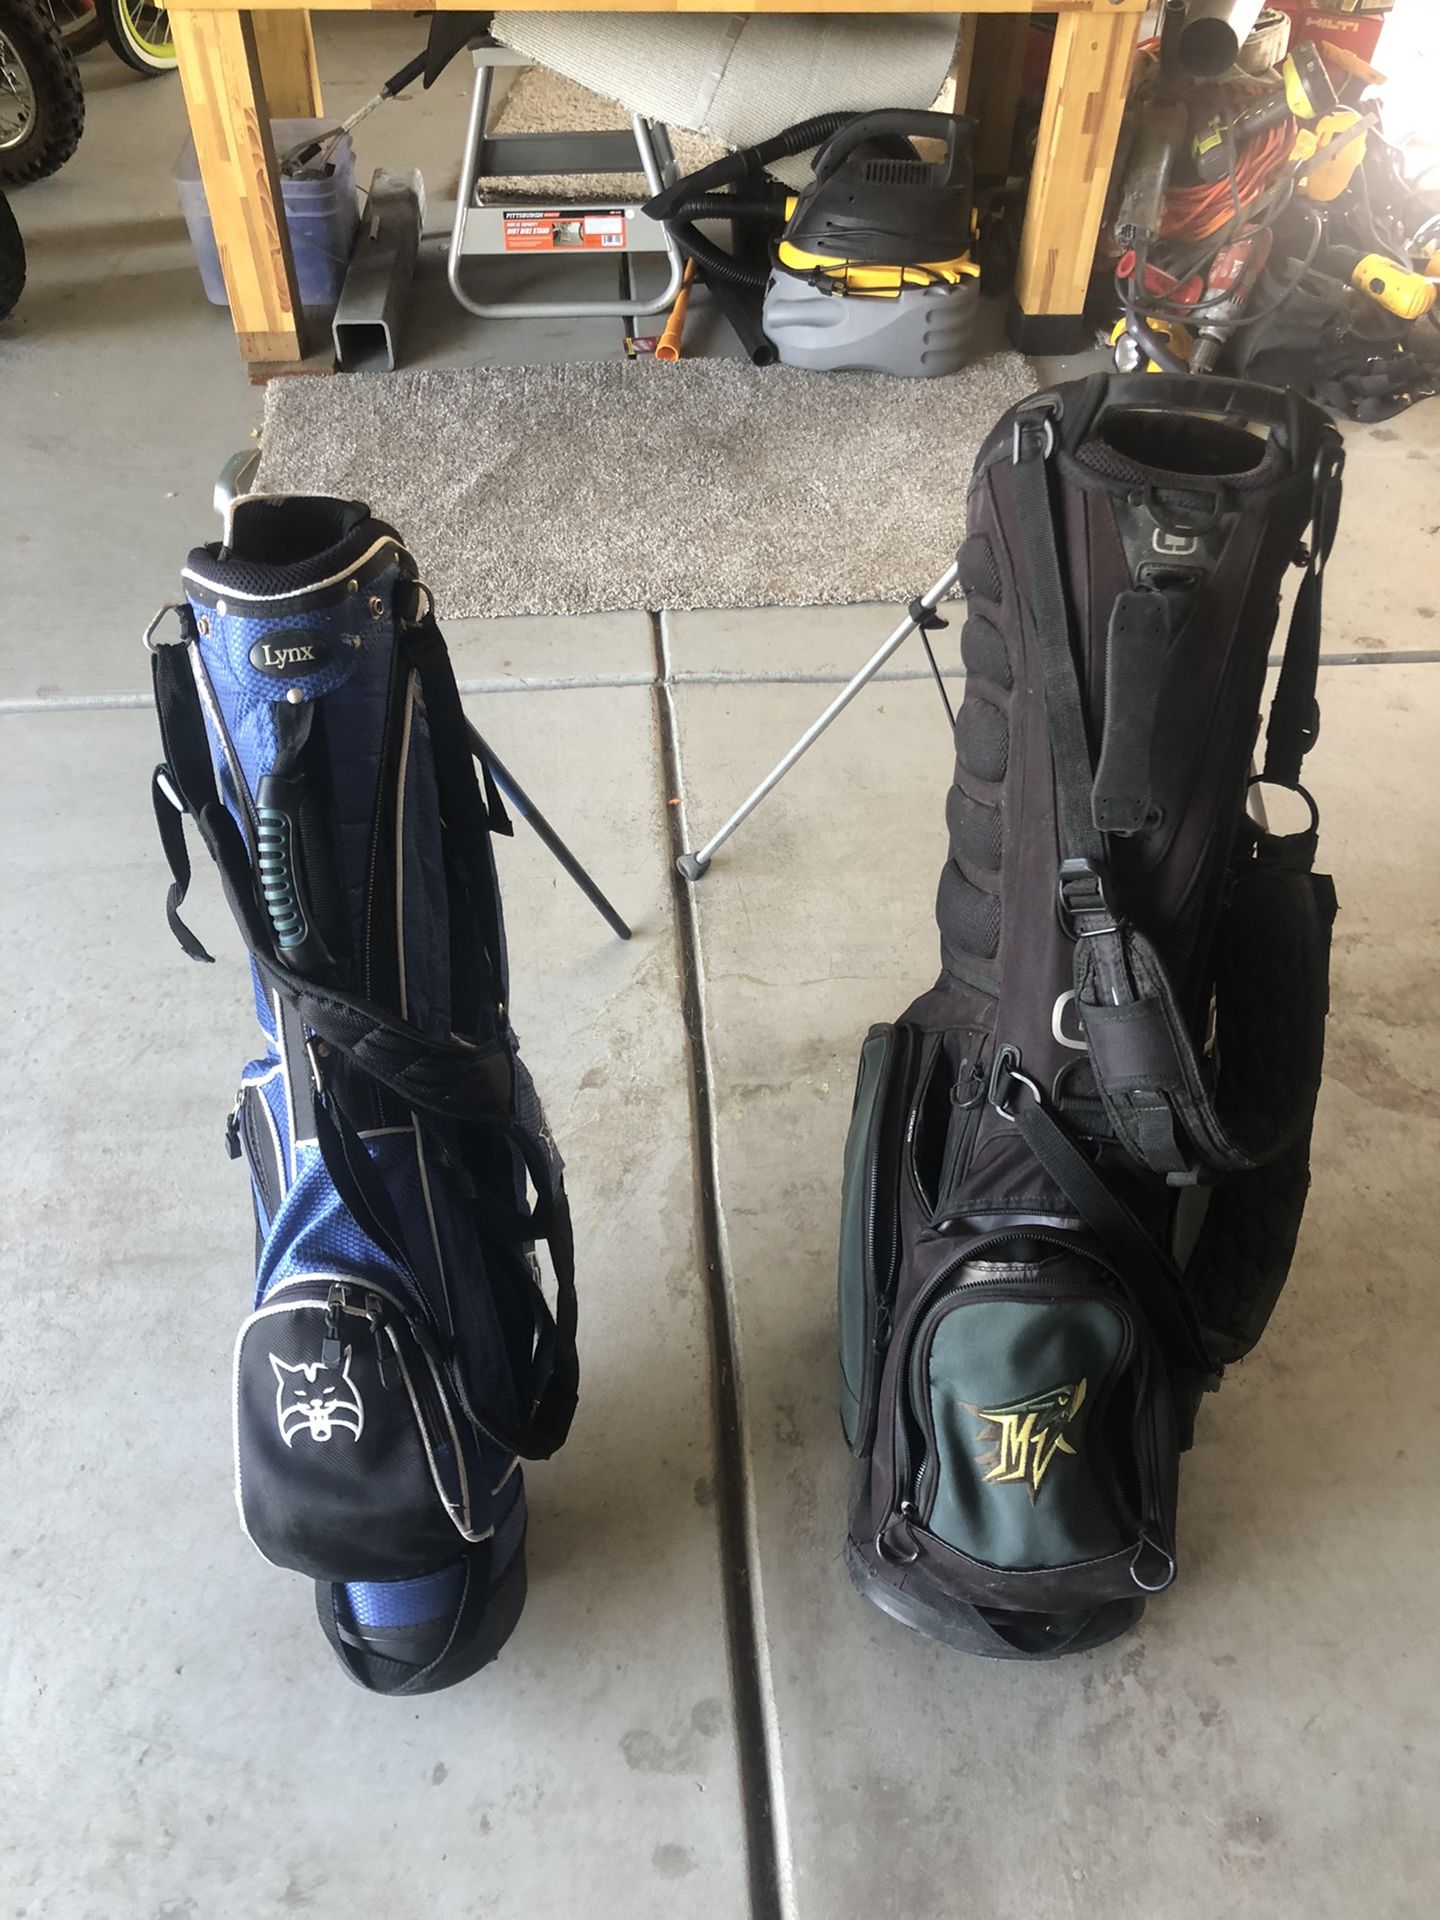 Free golf bags